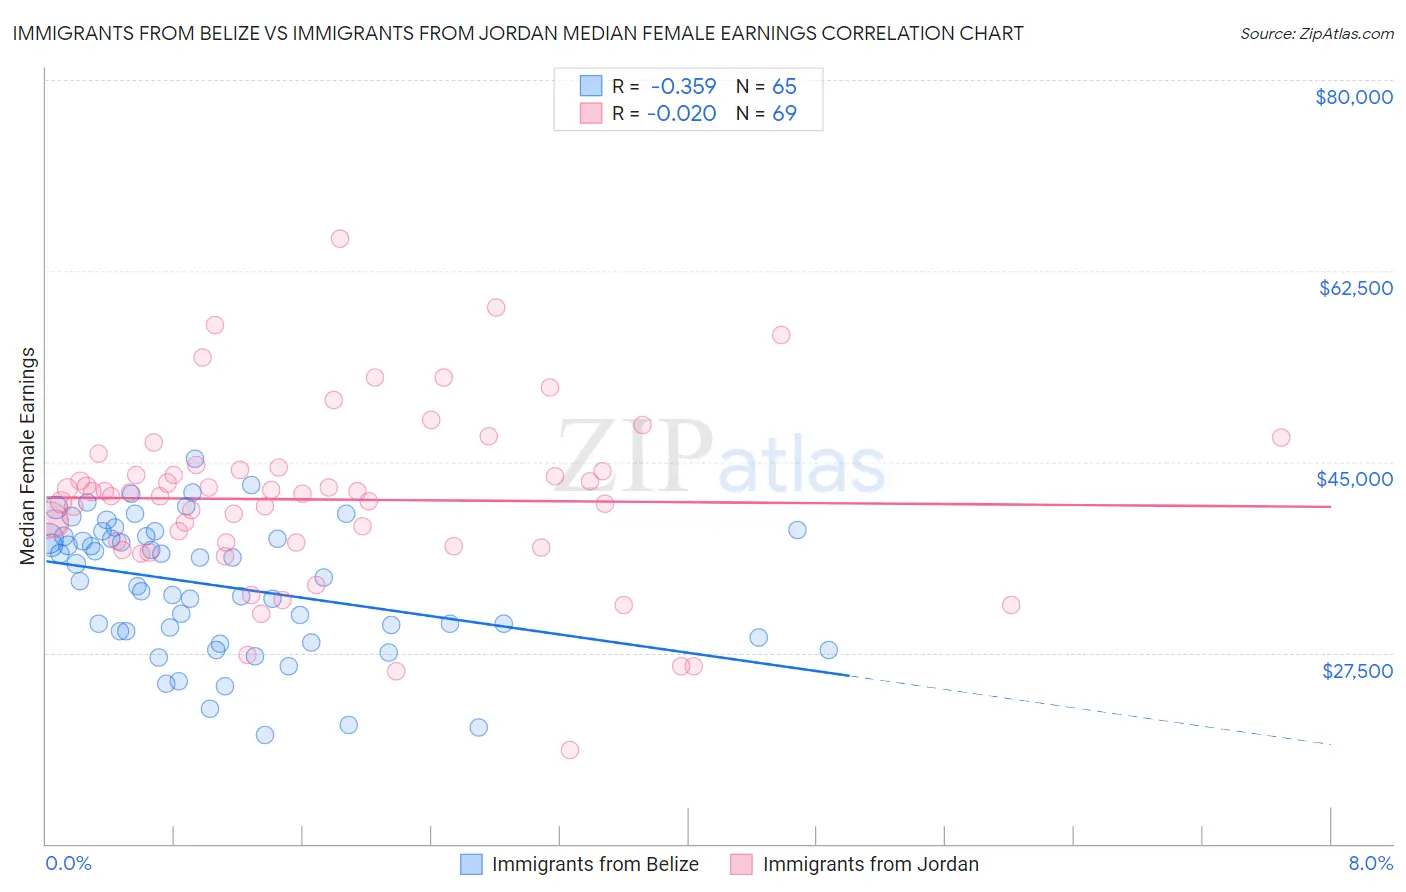 Immigrants from Belize vs Immigrants from Jordan Median Female Earnings